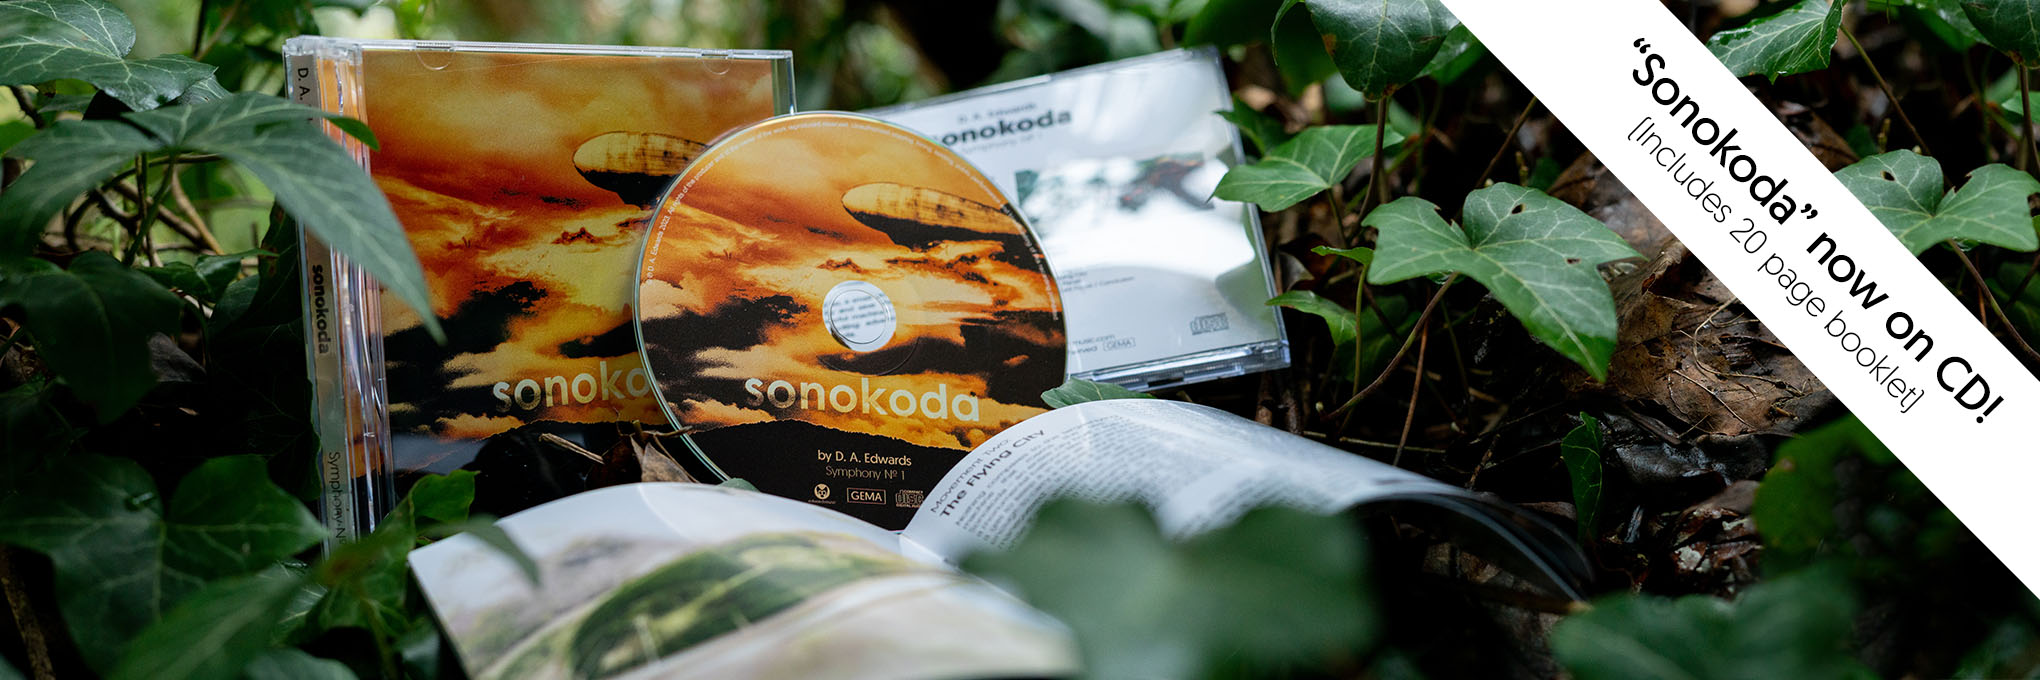 Sonokoda now available on CD!